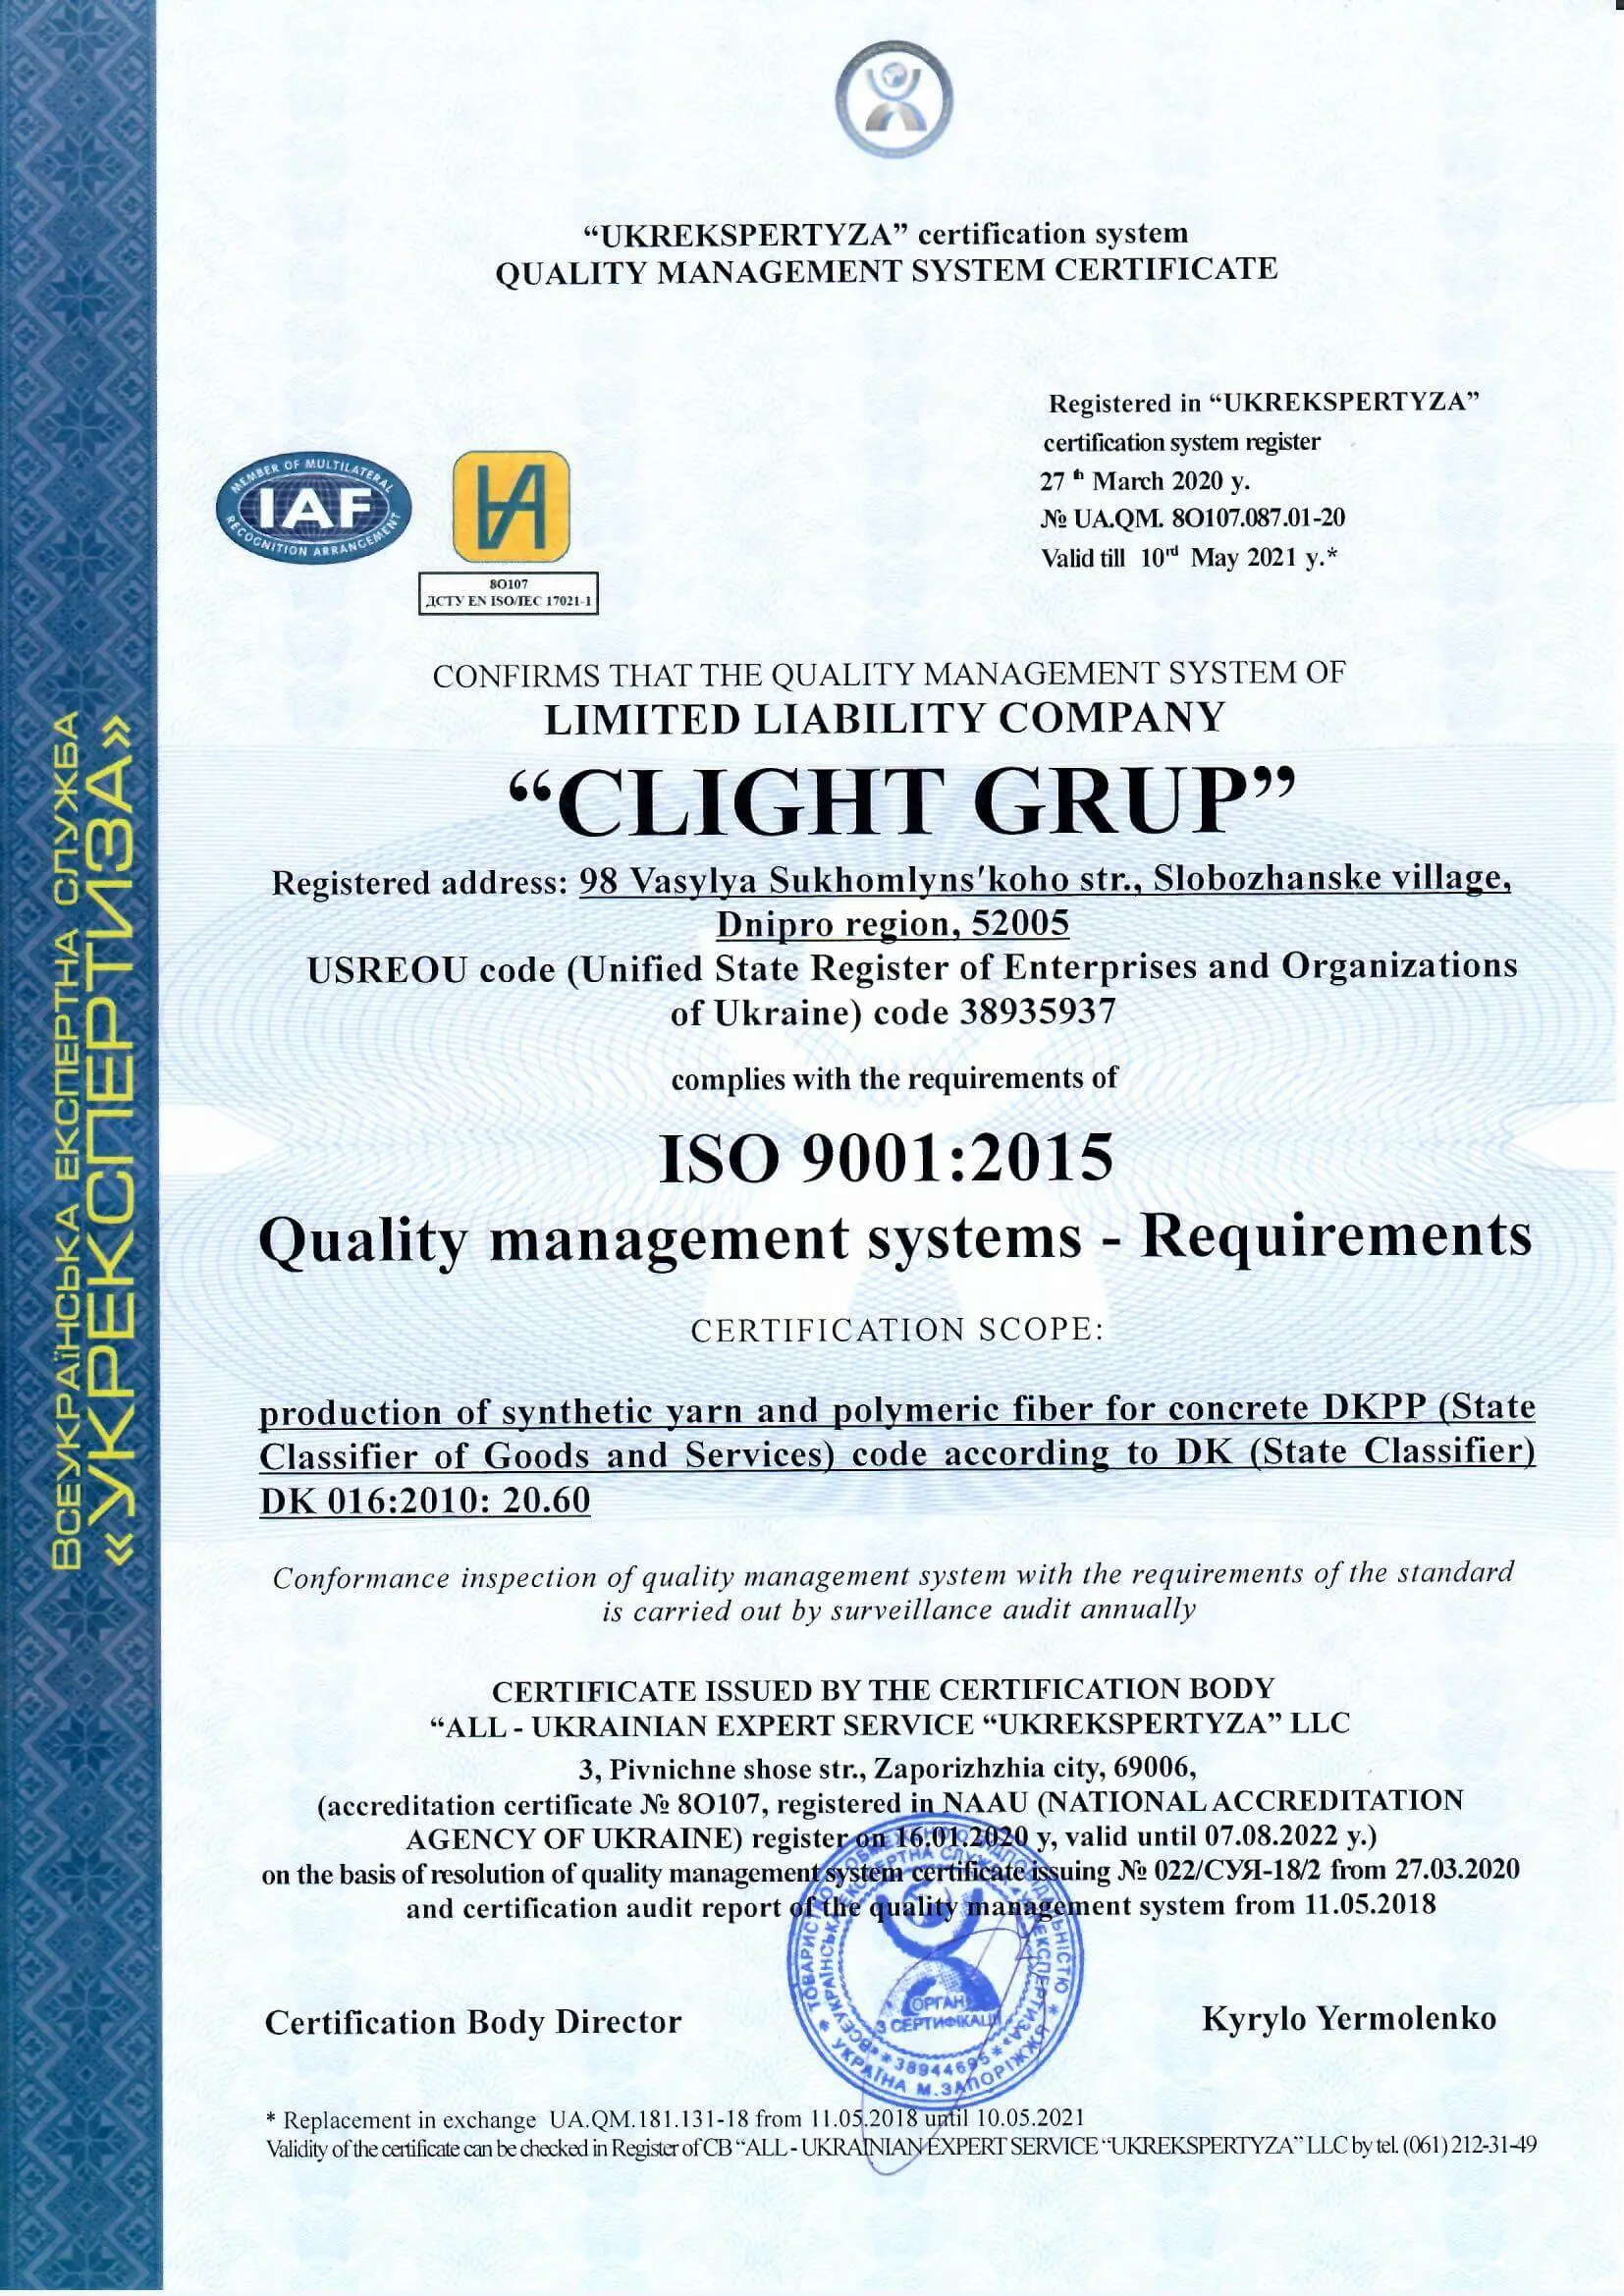 Система контроля качества FIBERMIX сертифицирована согласно ISO 9001:2015